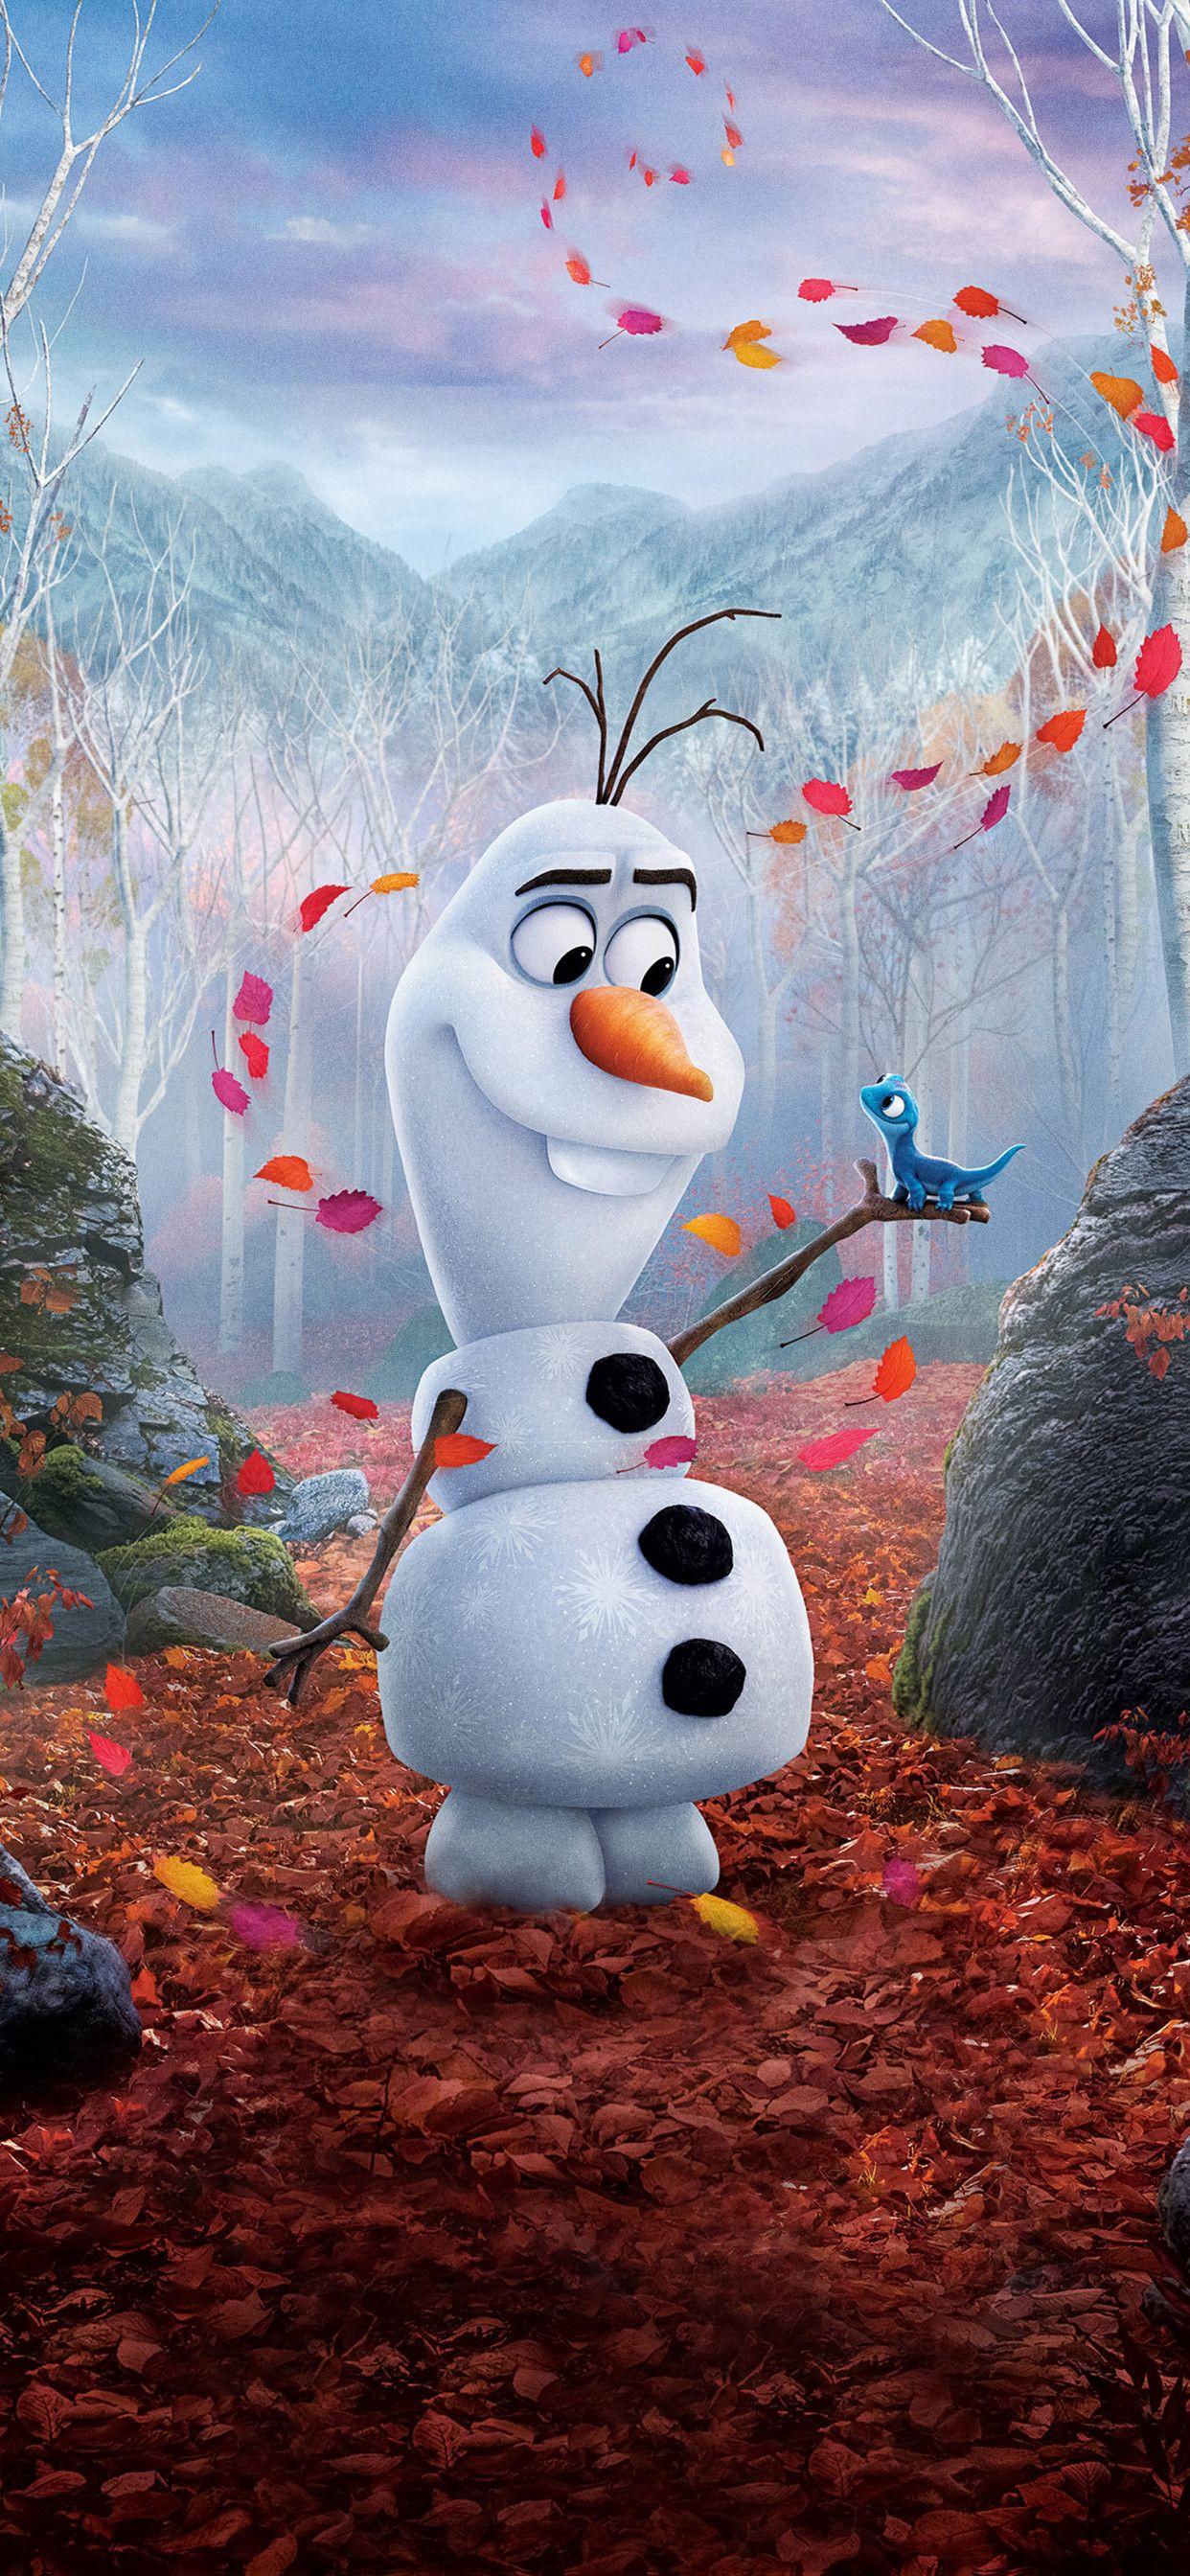 Olaf In Frozen 2 2019 iPhone XS MAX HD 4k Wallpaper